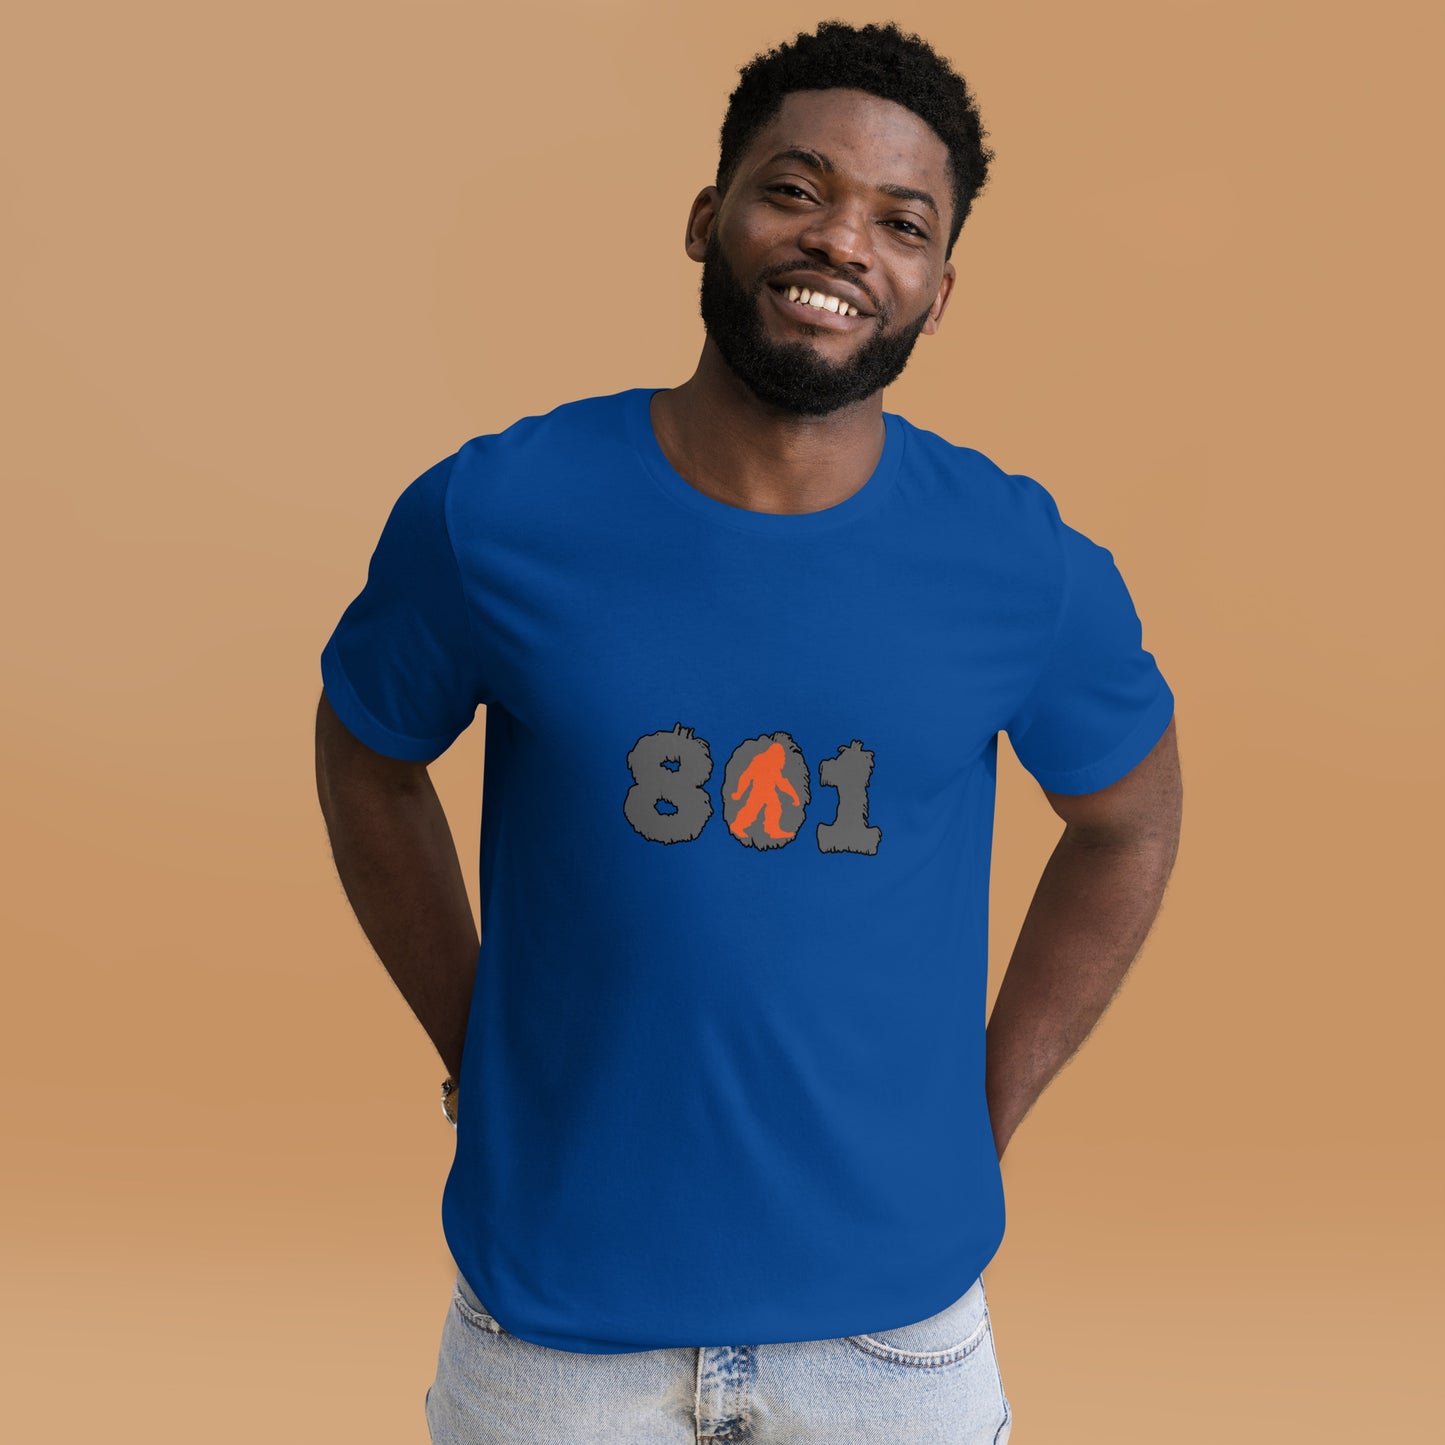 801 Unisex t-shirt